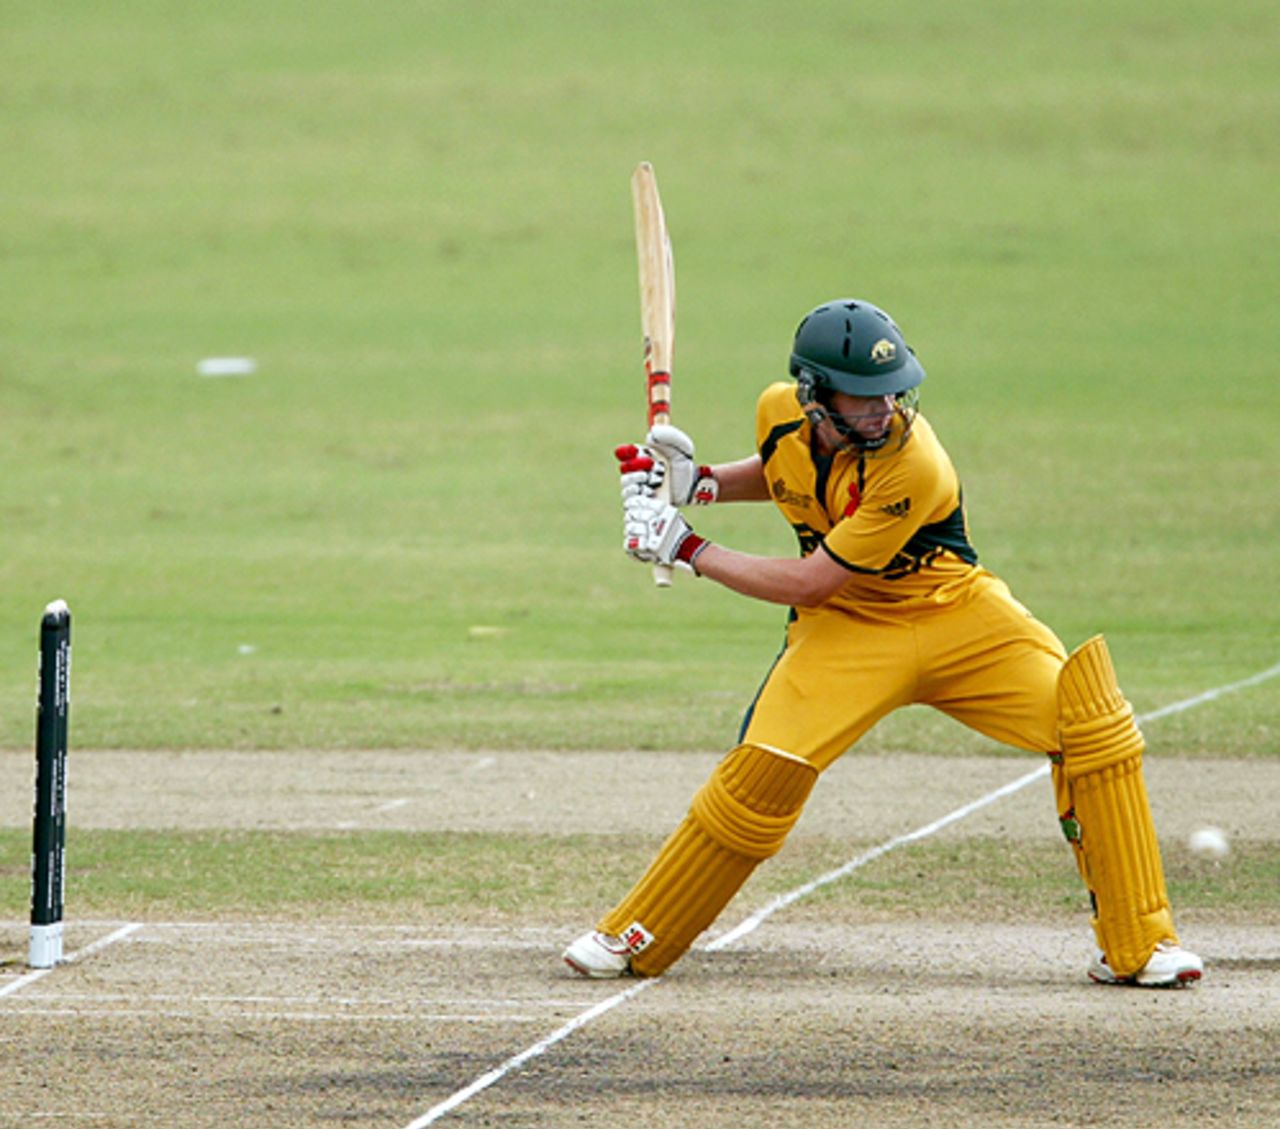 James Faulkner shapes up to play a drive, Australia Under-19s v Pakistan U-19s, Under-19 World Cup quarter-finals, Kuala Lumpur, February 25, 2008 
